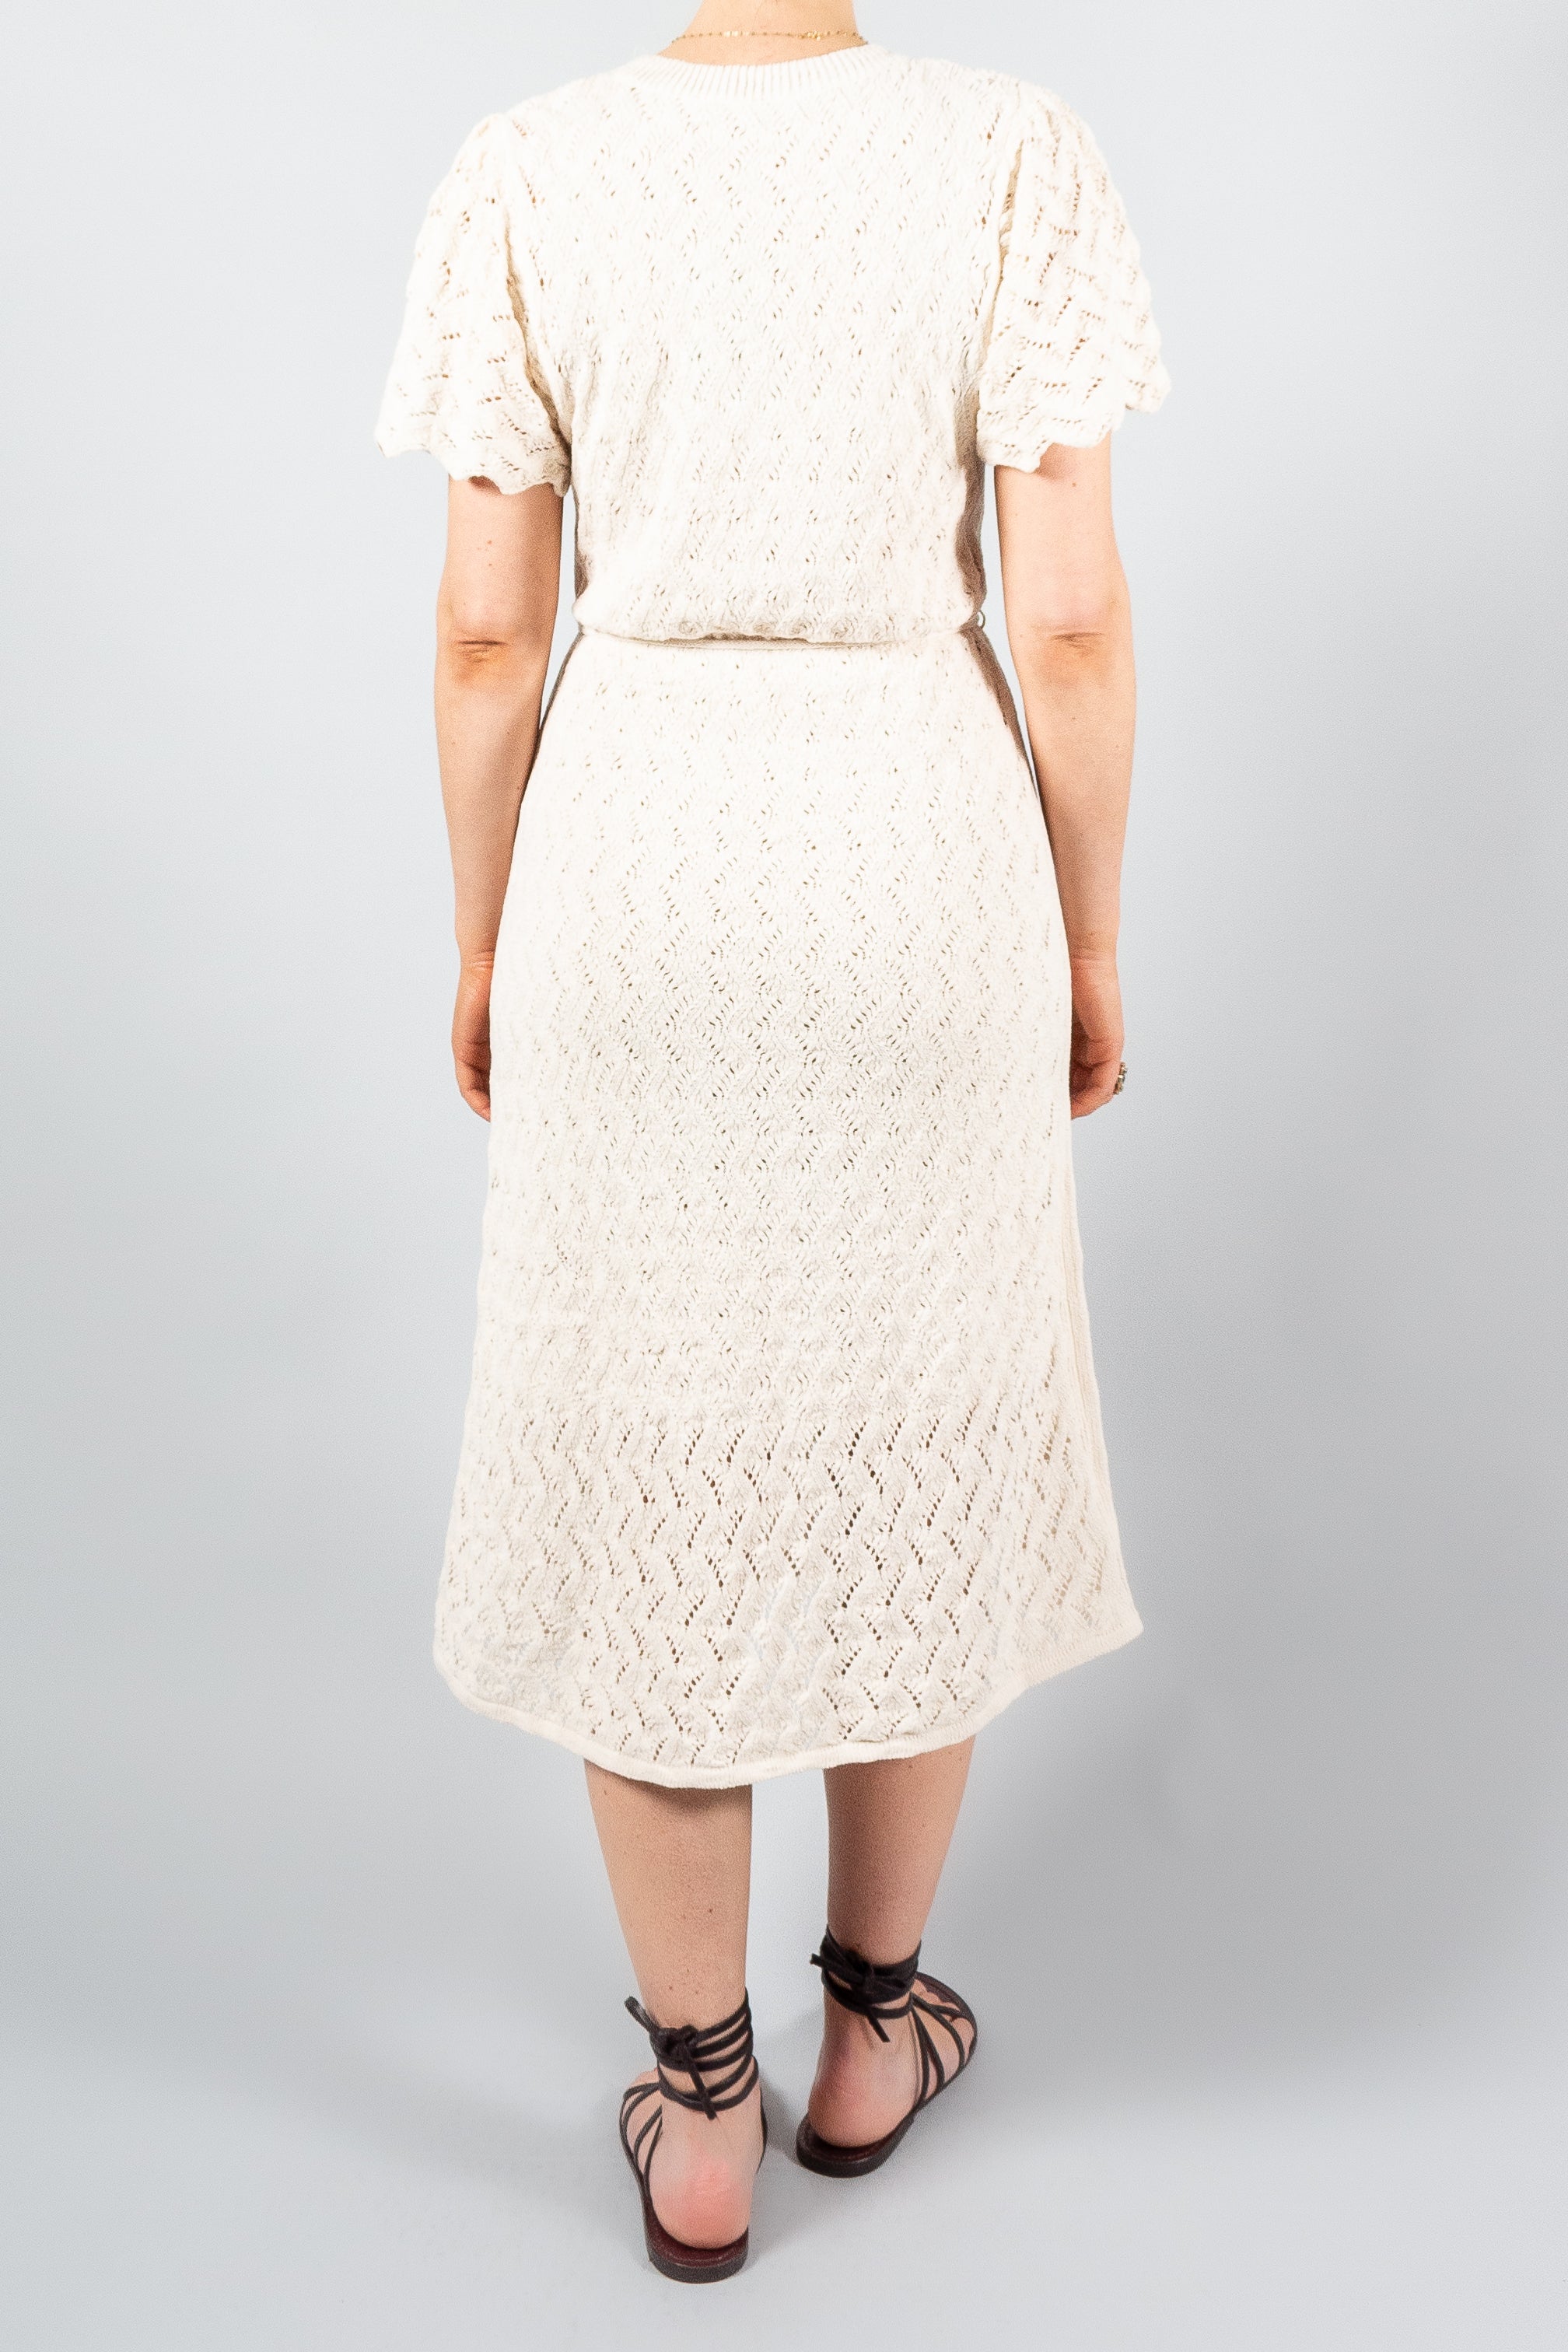 Vanessa Bruno Clementina Crochet Dress-Dresses and Jumpsuits-Misch-Boutique-Vancouver-Canada-misch.ca